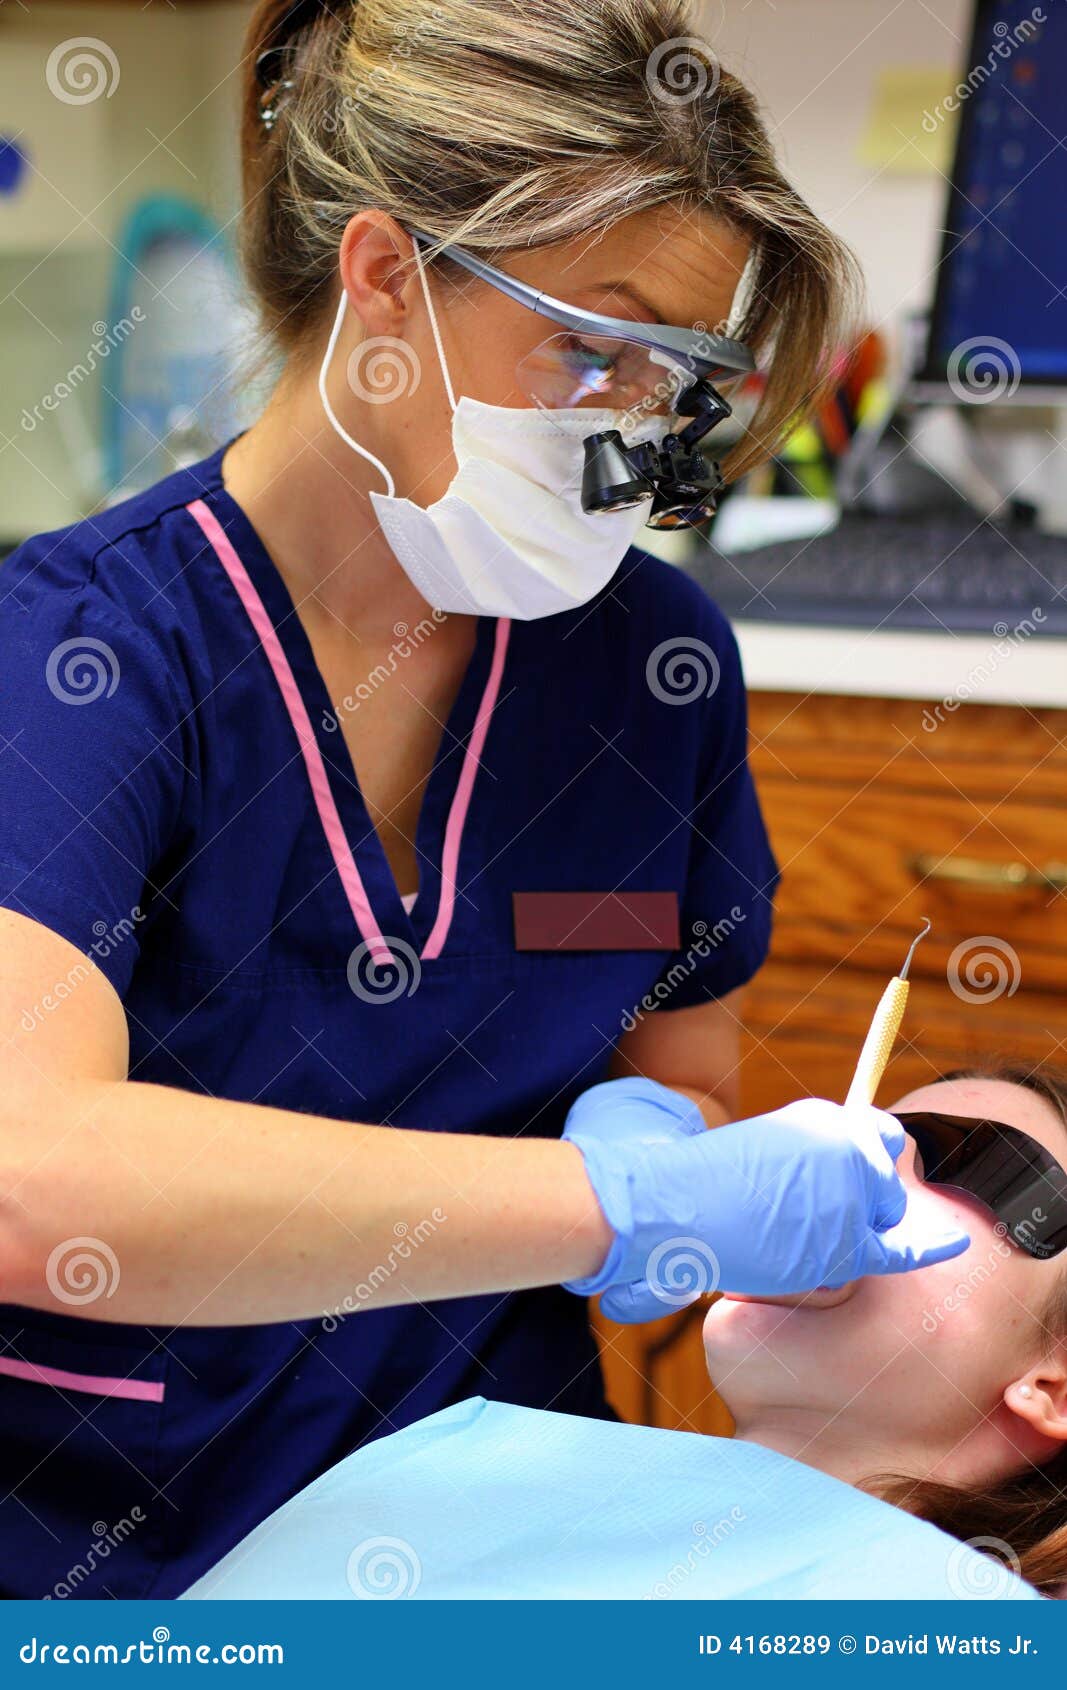 dental hygienist at work